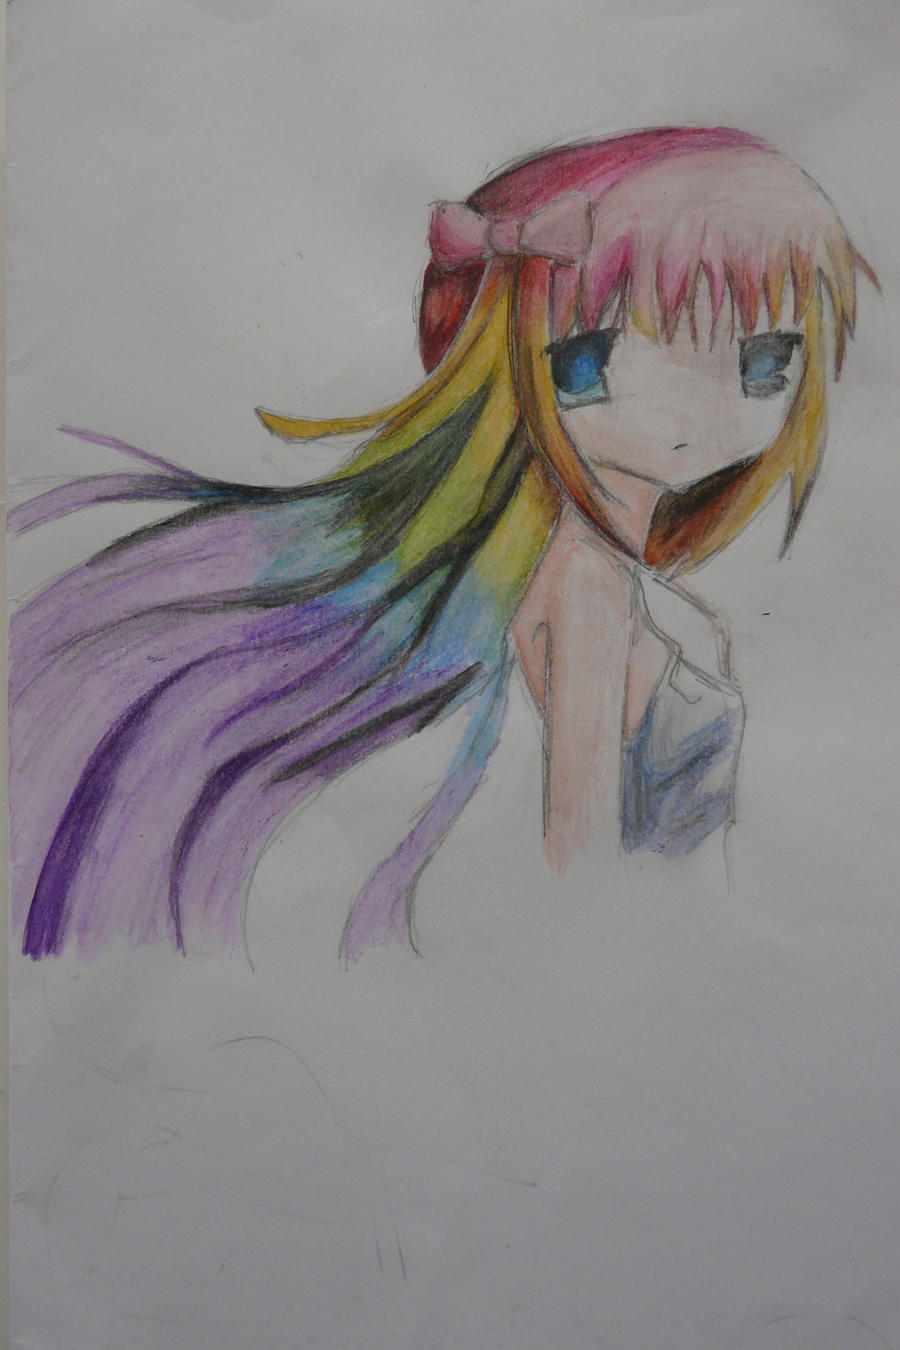 Manga girl with rainbow hair by RippledWater on DeviantArt